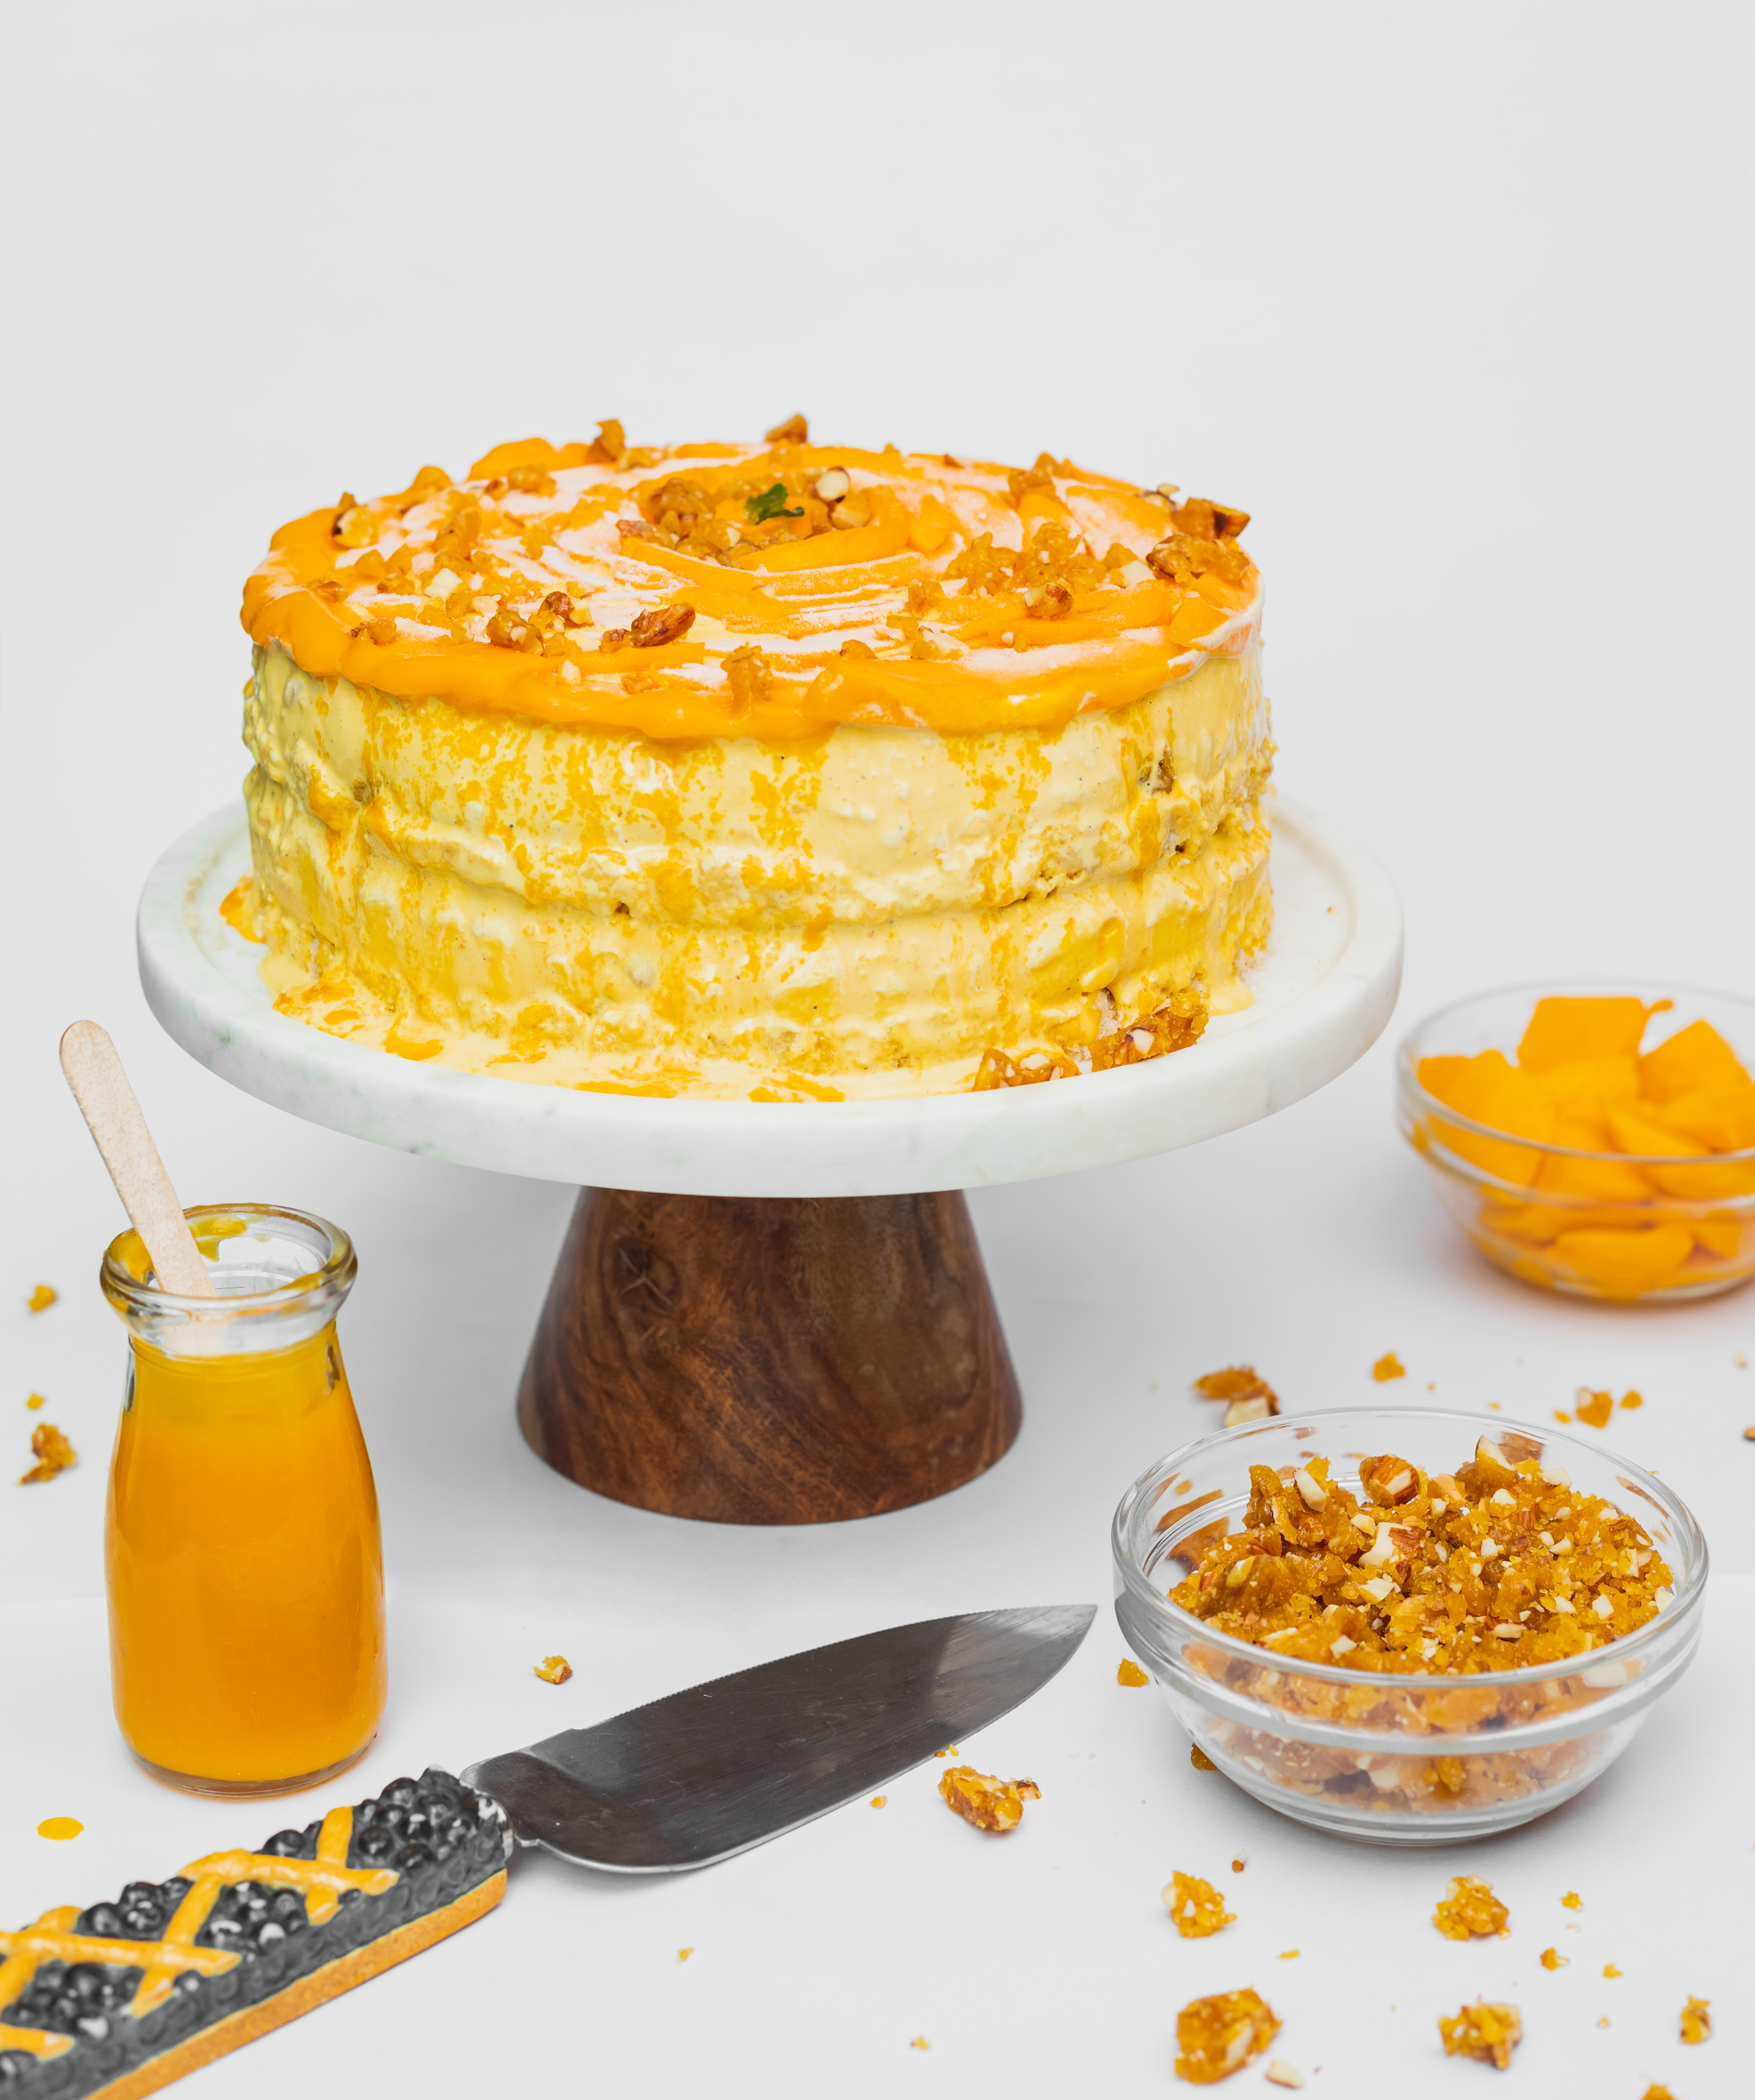 Mango Ice box cake / no bake mango cake - Reciphoria